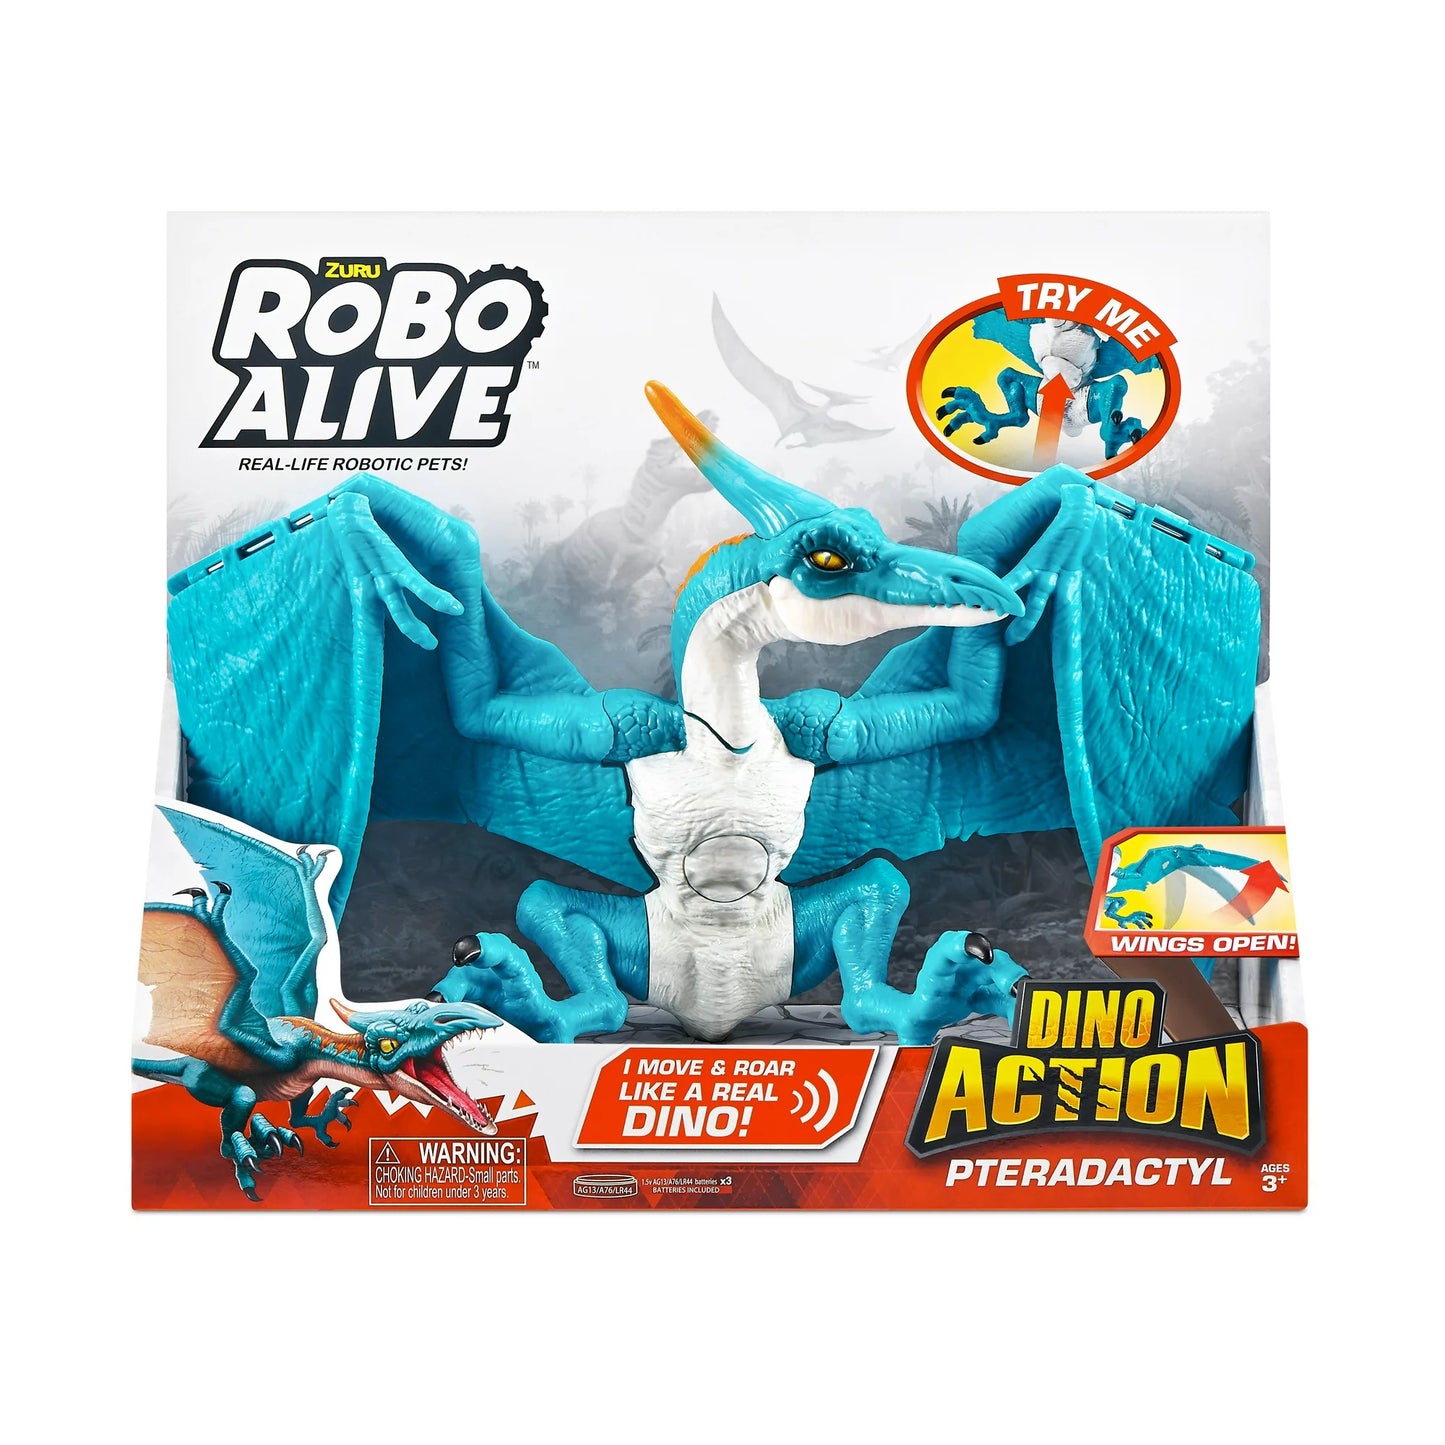 Robo Alive Dino Action Pterodactyl toy by ZURU 7173